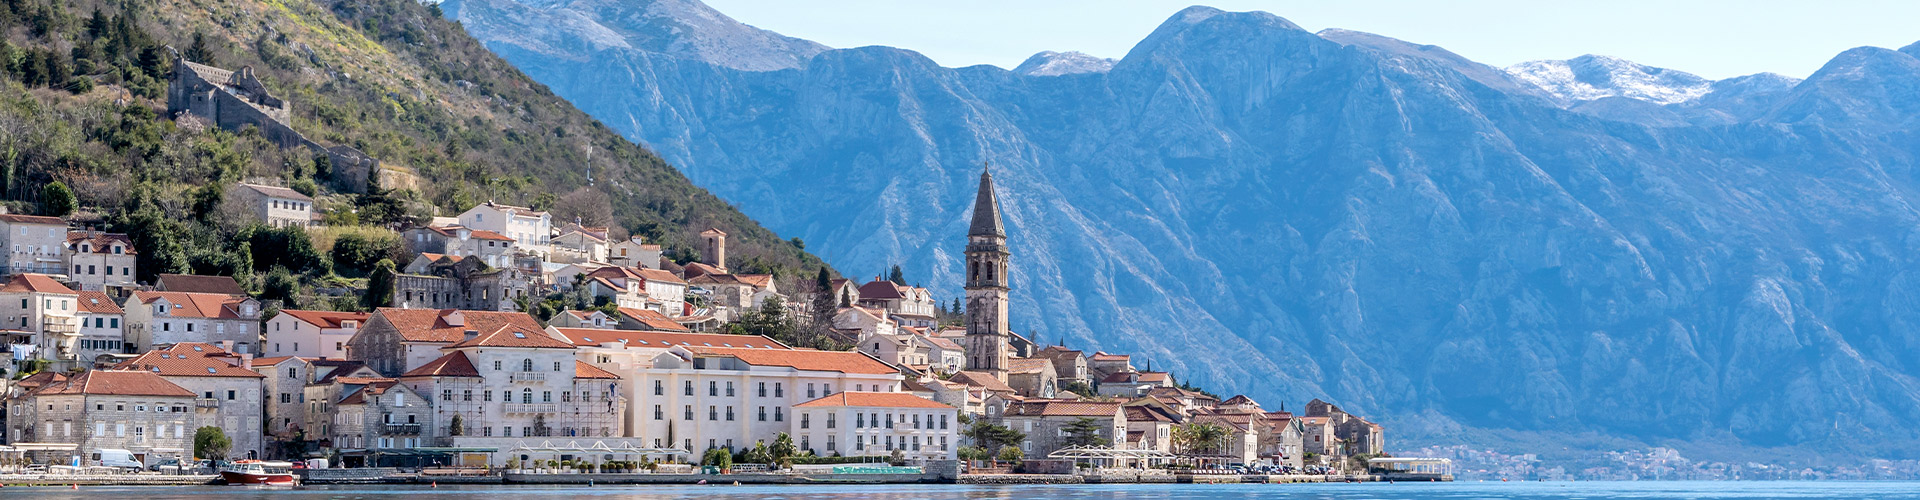 tourhub | Intrepid Travel | Croatia and Montenegro Sailing Adventure  | ZSRUC